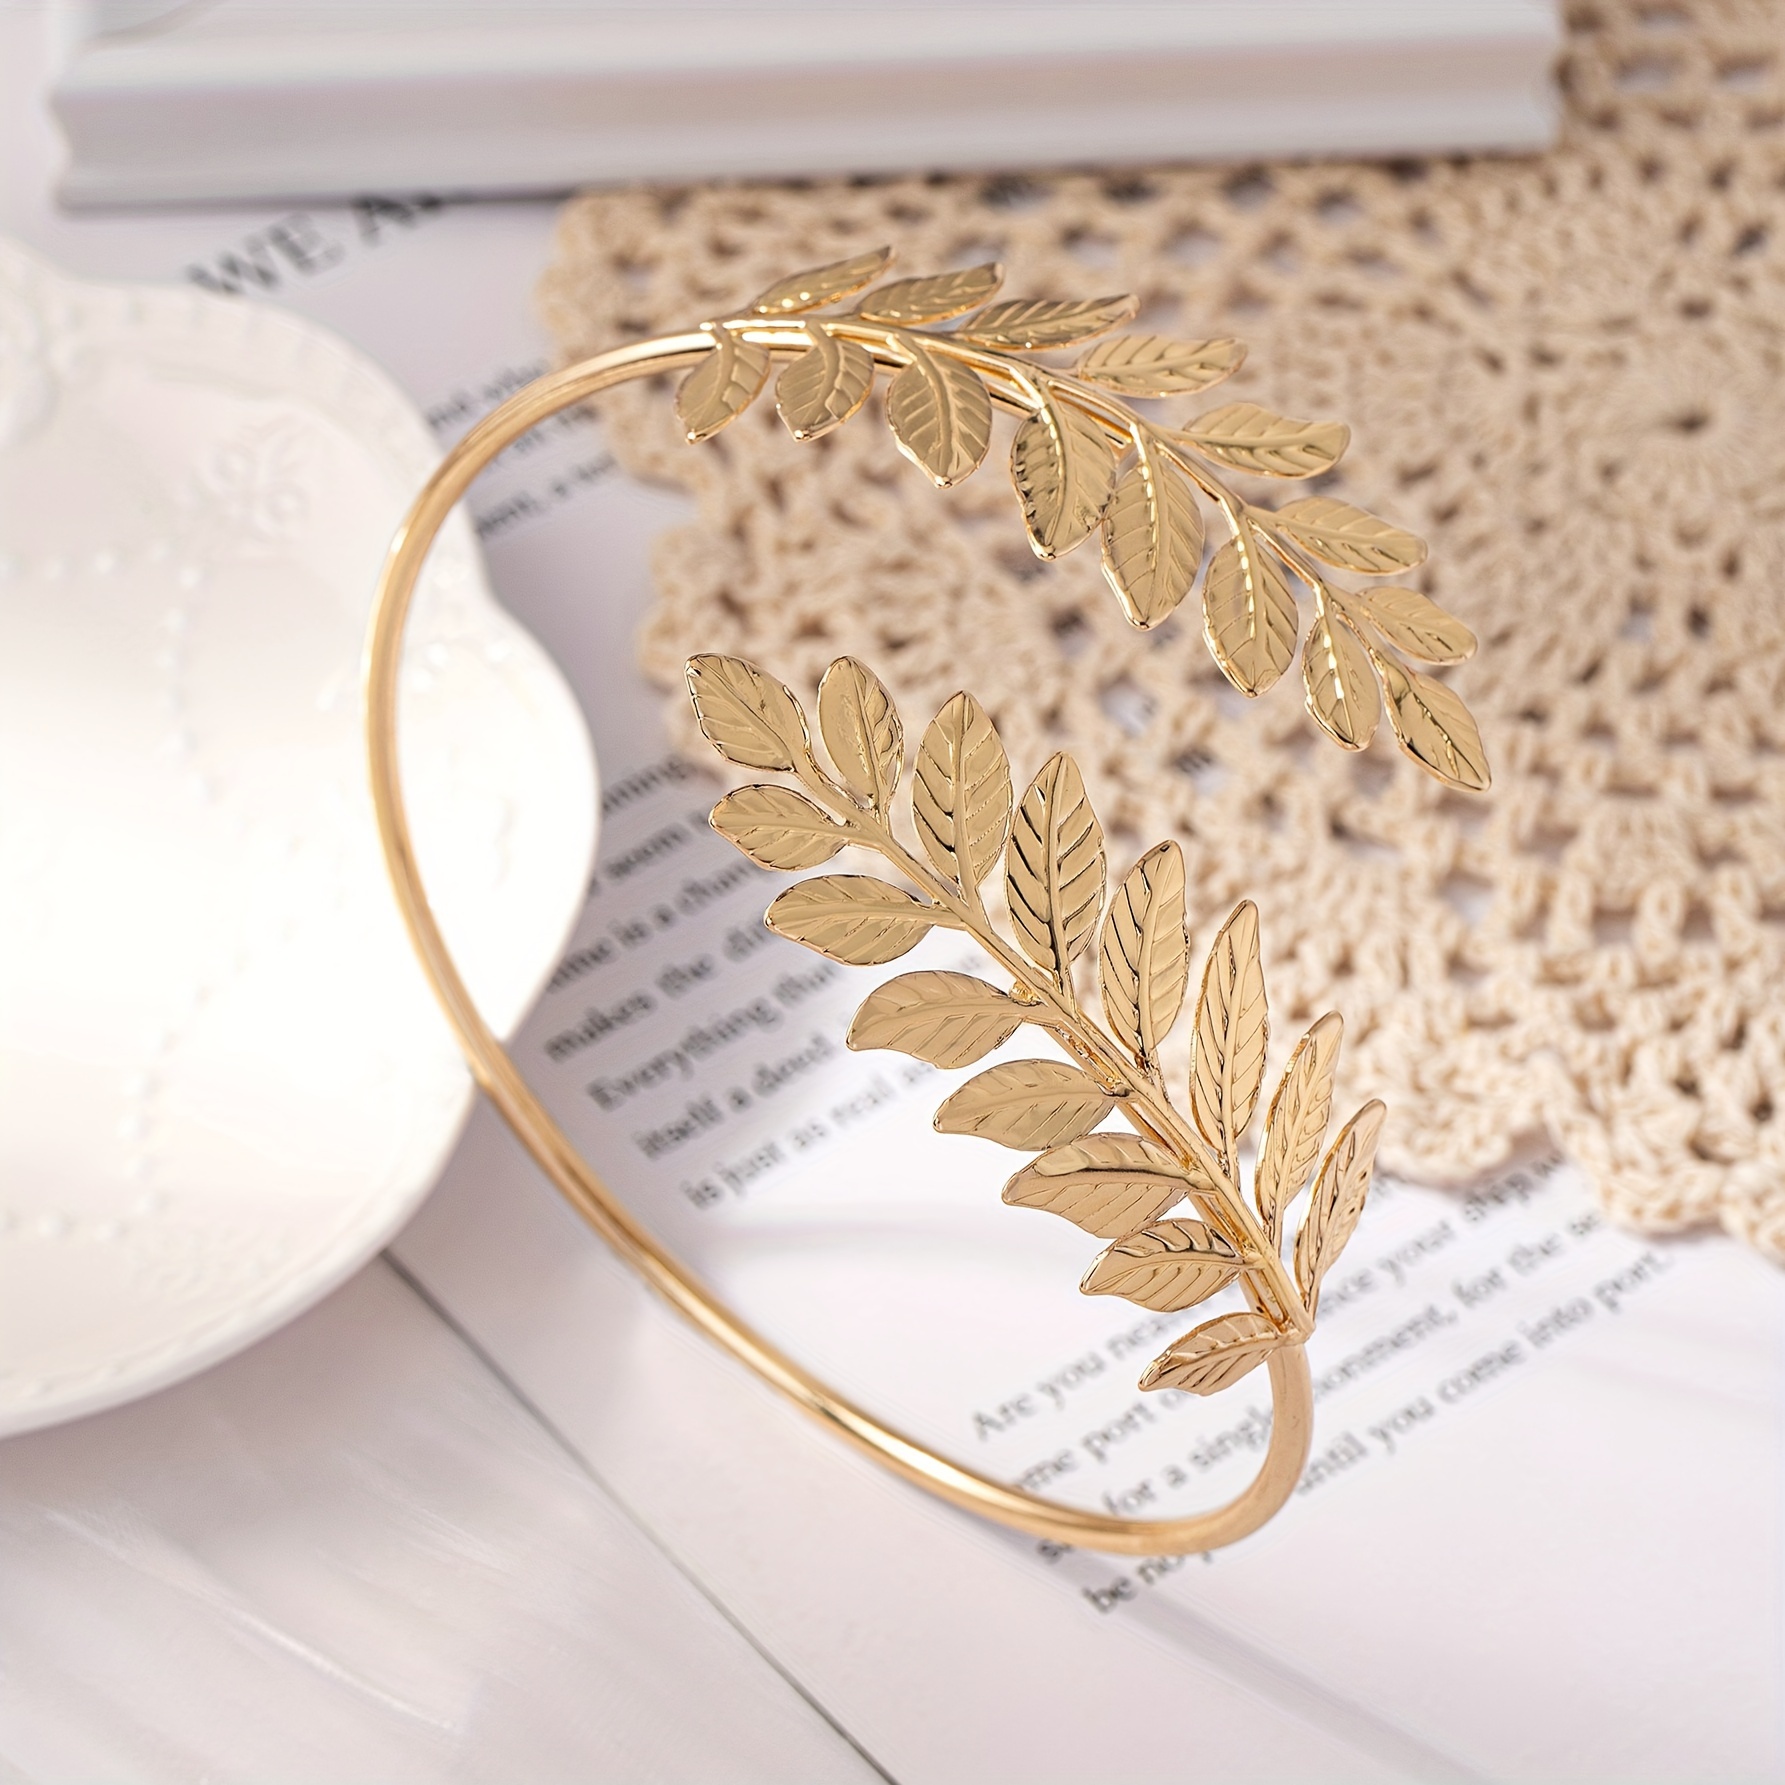 

Golden Leaf Design Open Cuff Bangle Bracelet For Women, Elegant And Simple, Adjustable Metal Arm Accessory, Versatile Fashion Jewelry